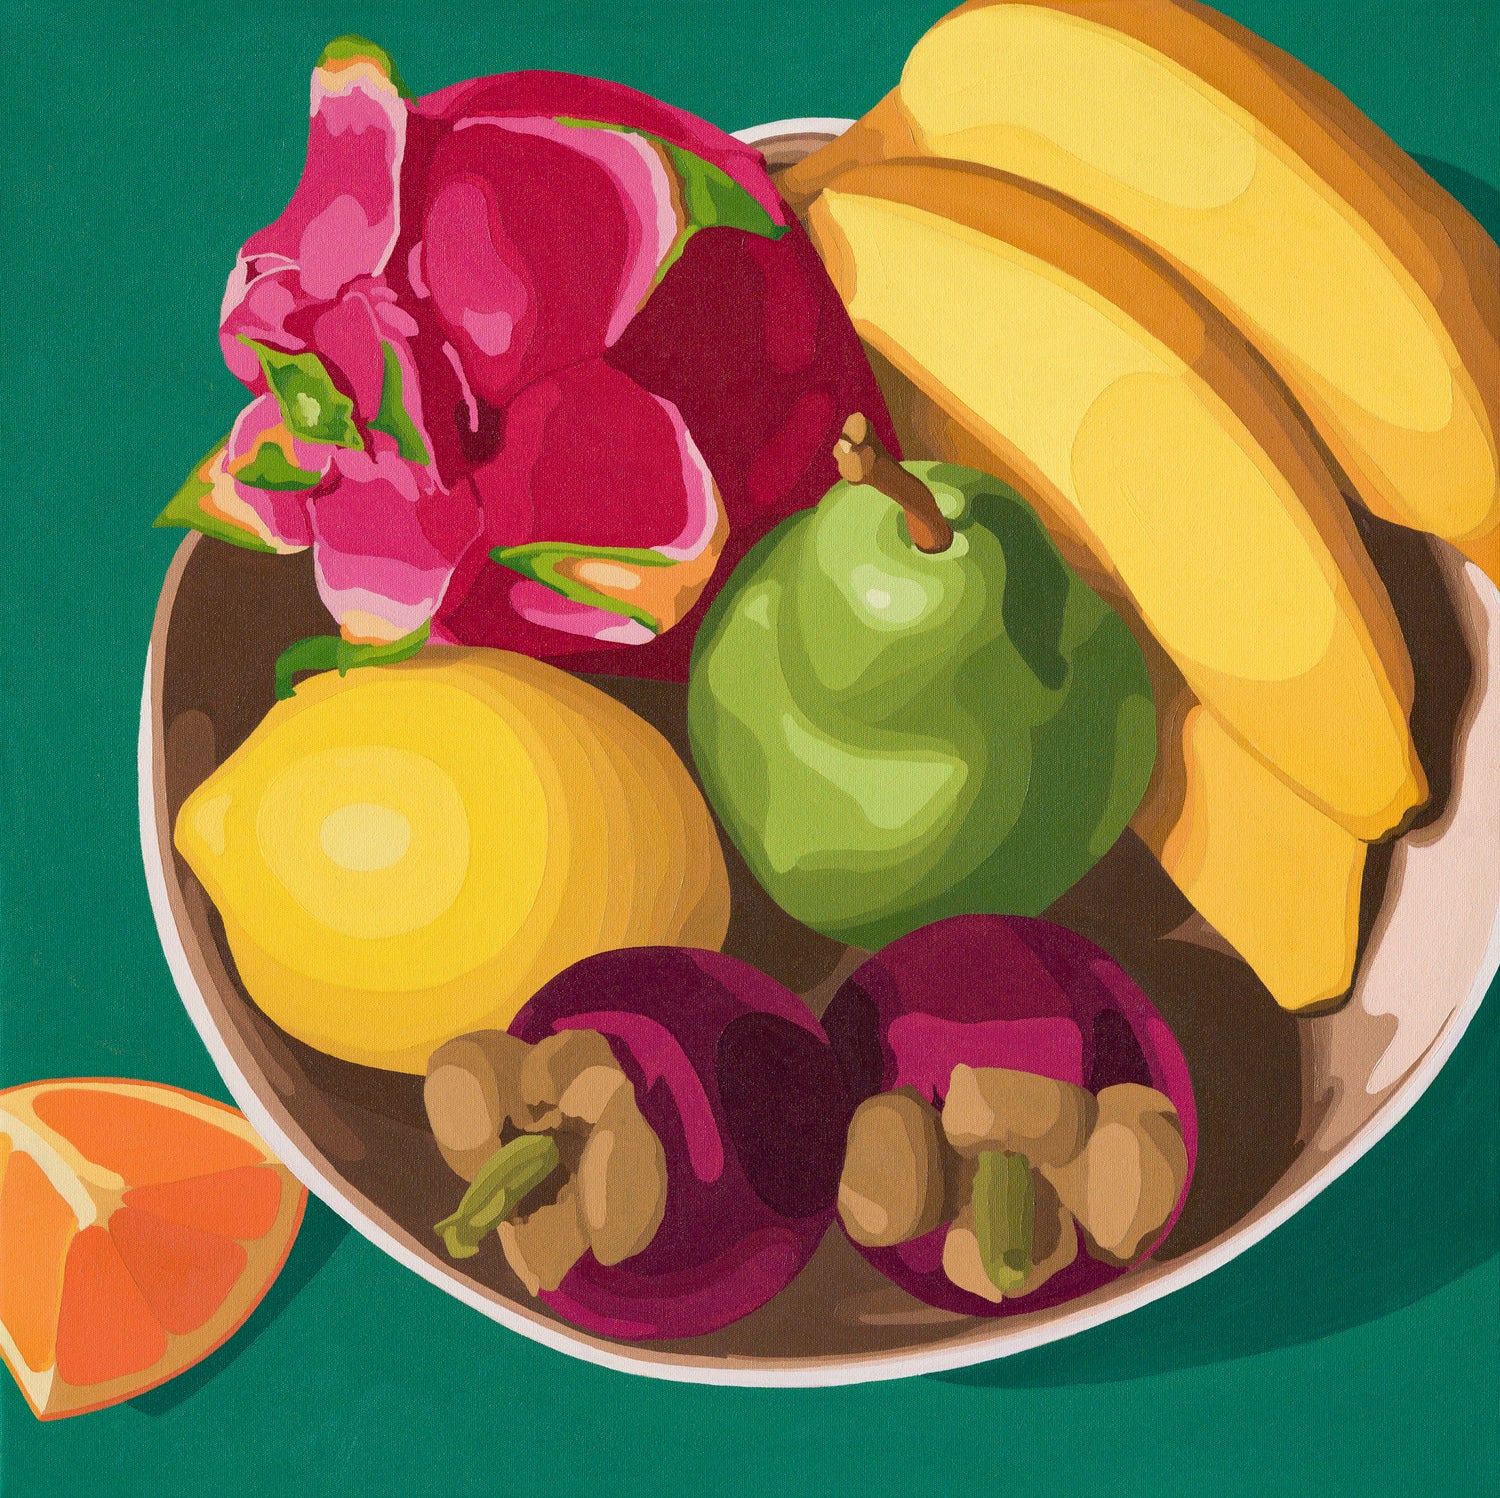 Yani Lenehan is a Bathurst artist specialising in original artworks all about fruit